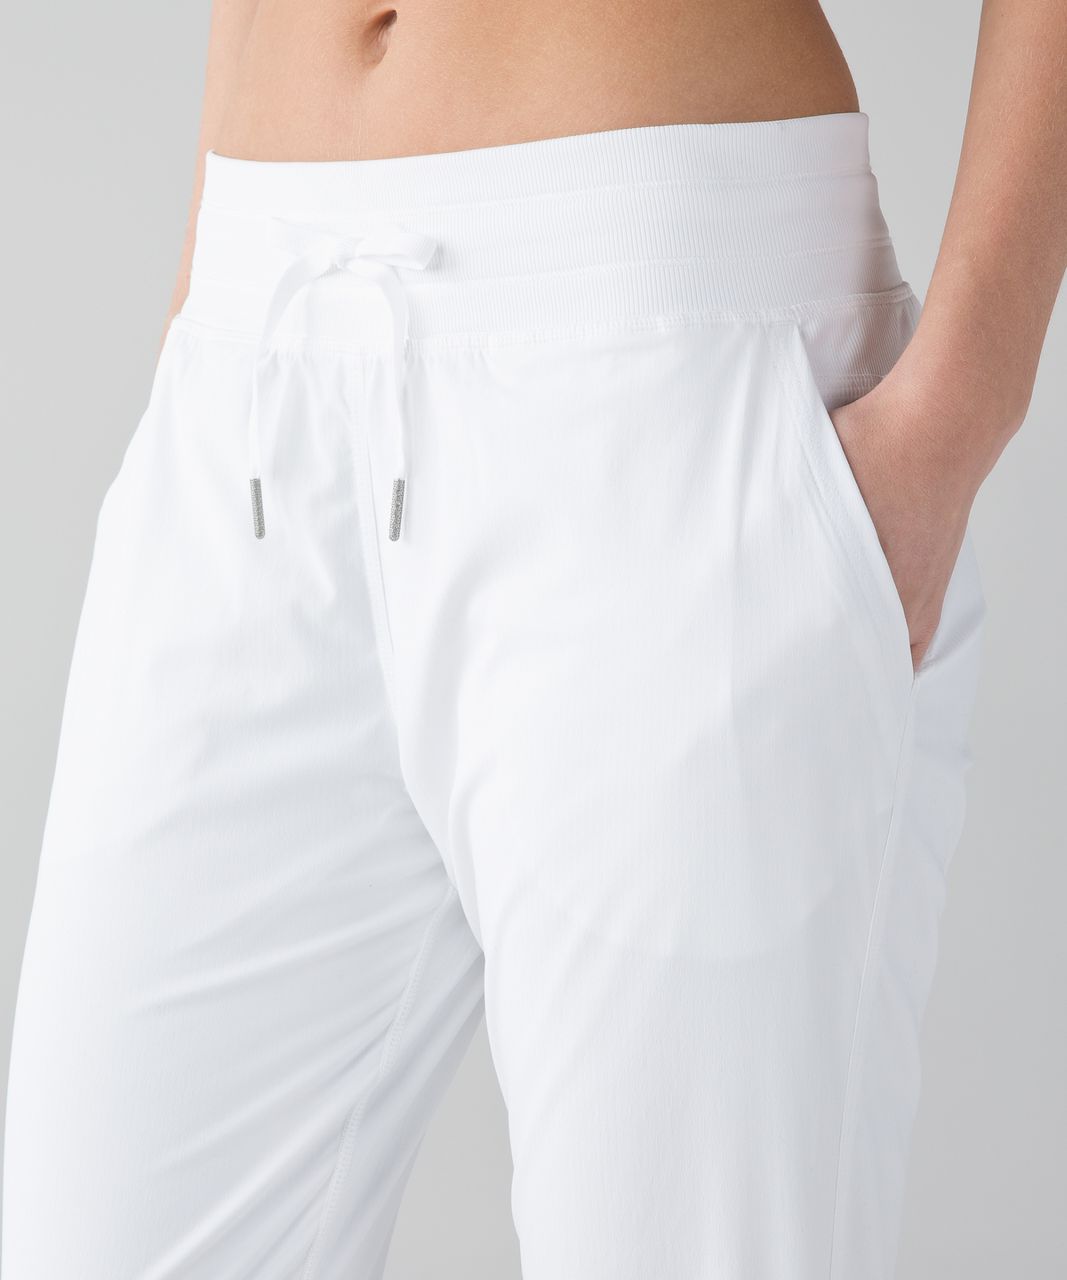 LULULEMON SIZE 2 White Dance Studio Crop Lined Pants Cinched Hem £16.49 -  PicClick UK